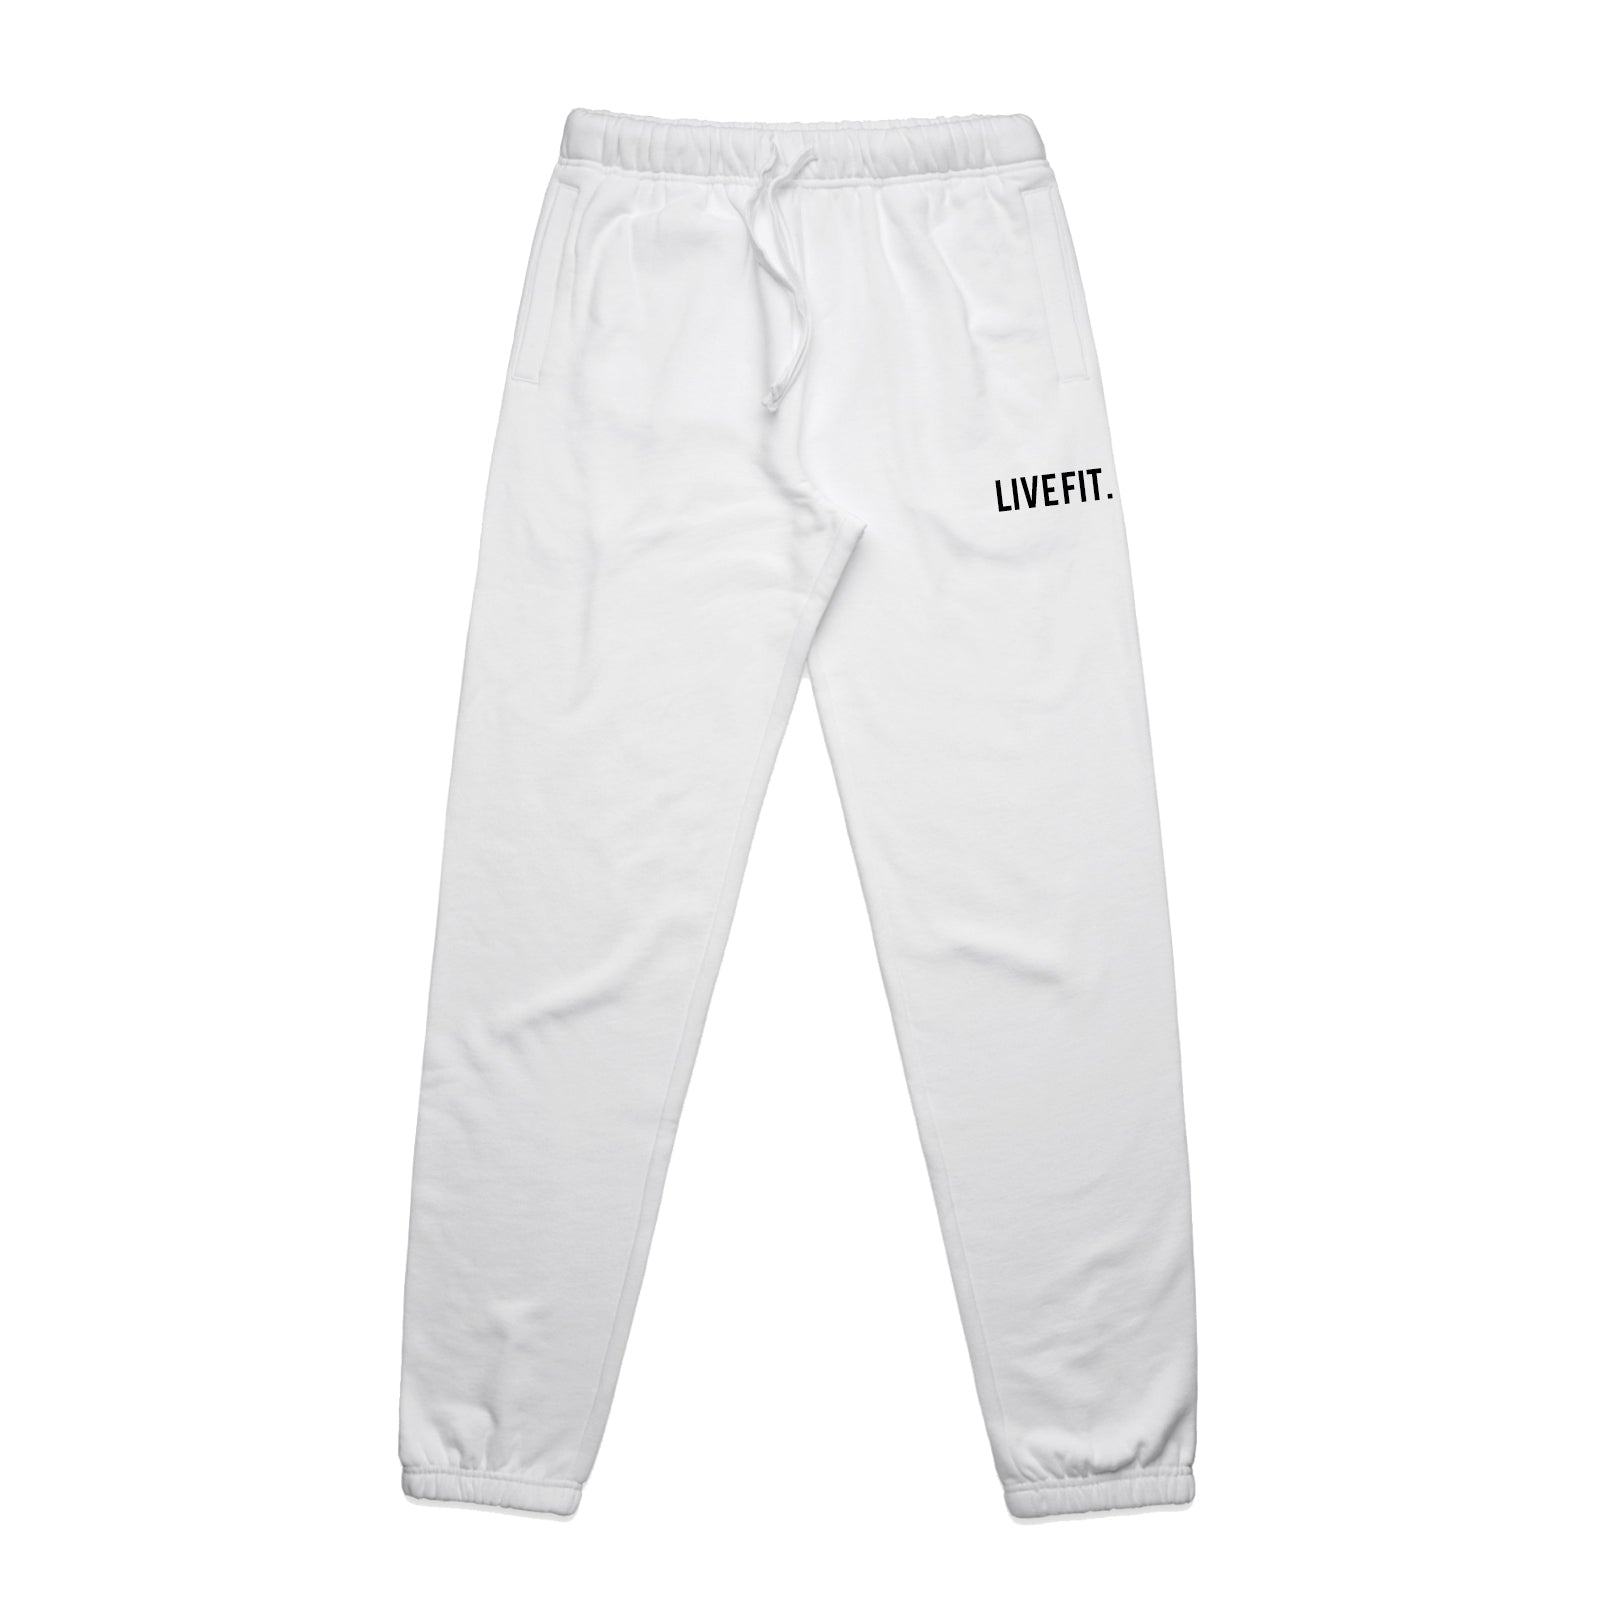 Icon Sweat Pants - White - Live Fit. Apparel